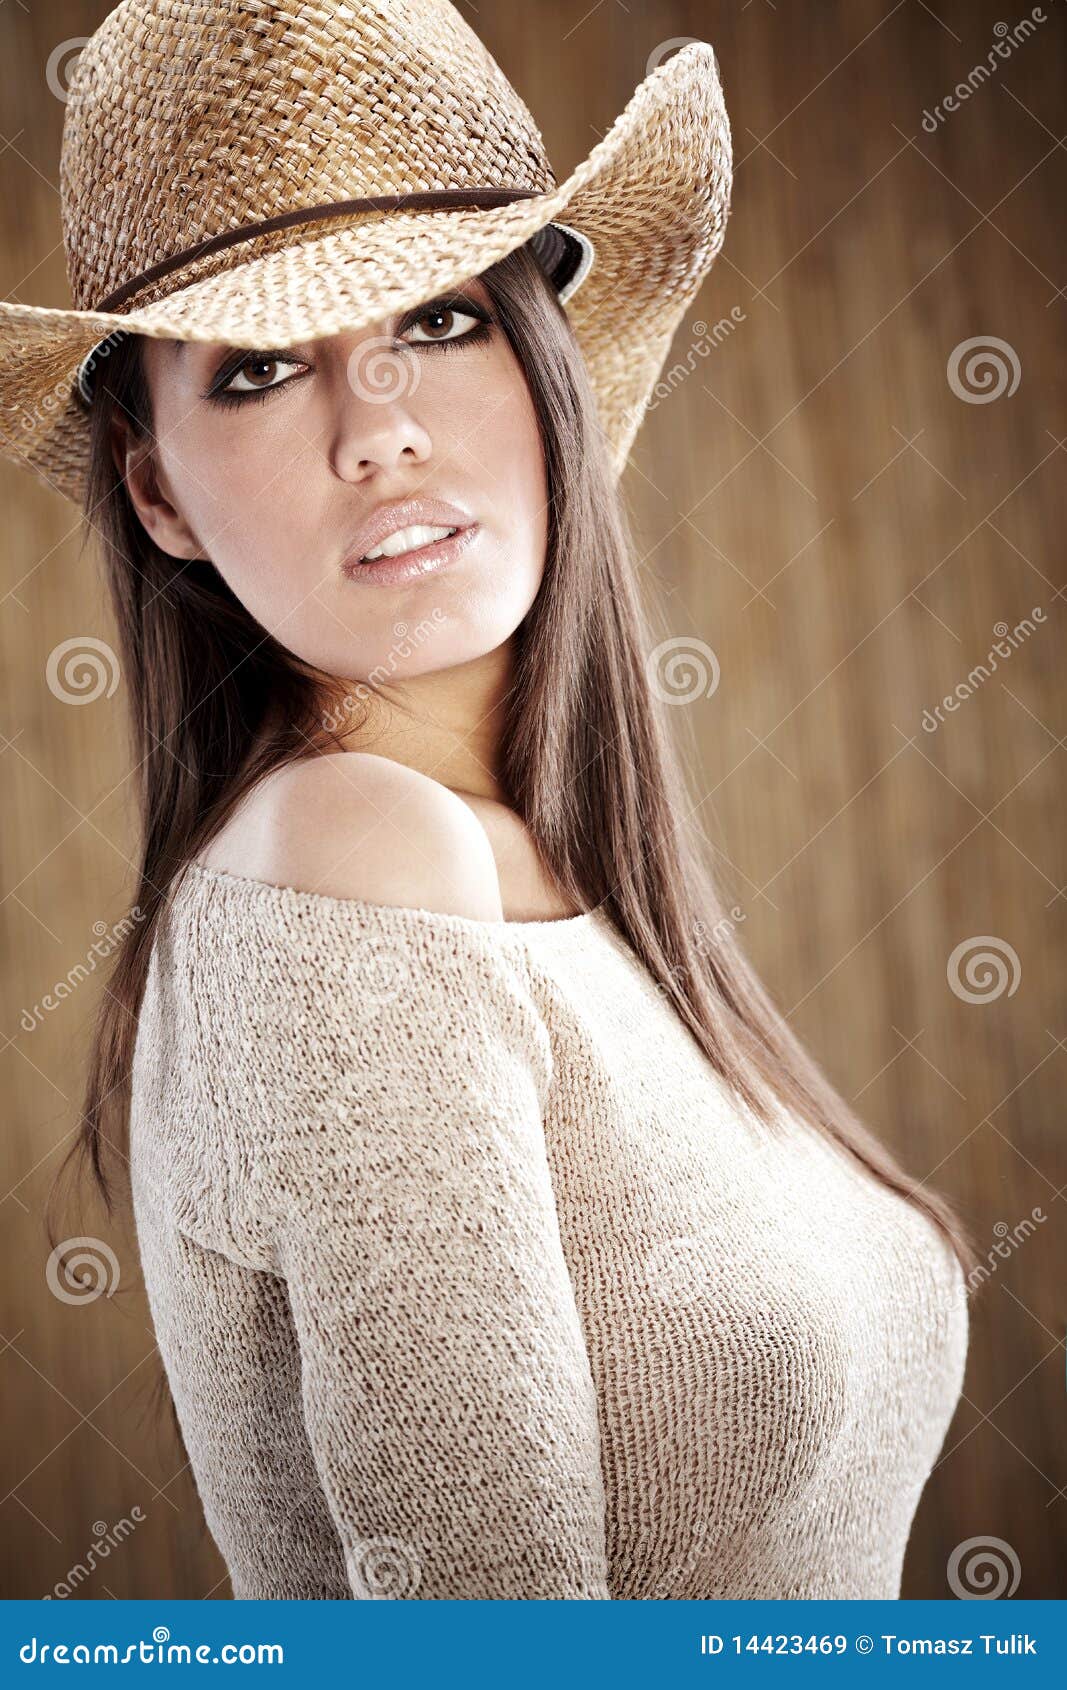 christian saso share sexy cowgirl pics photos